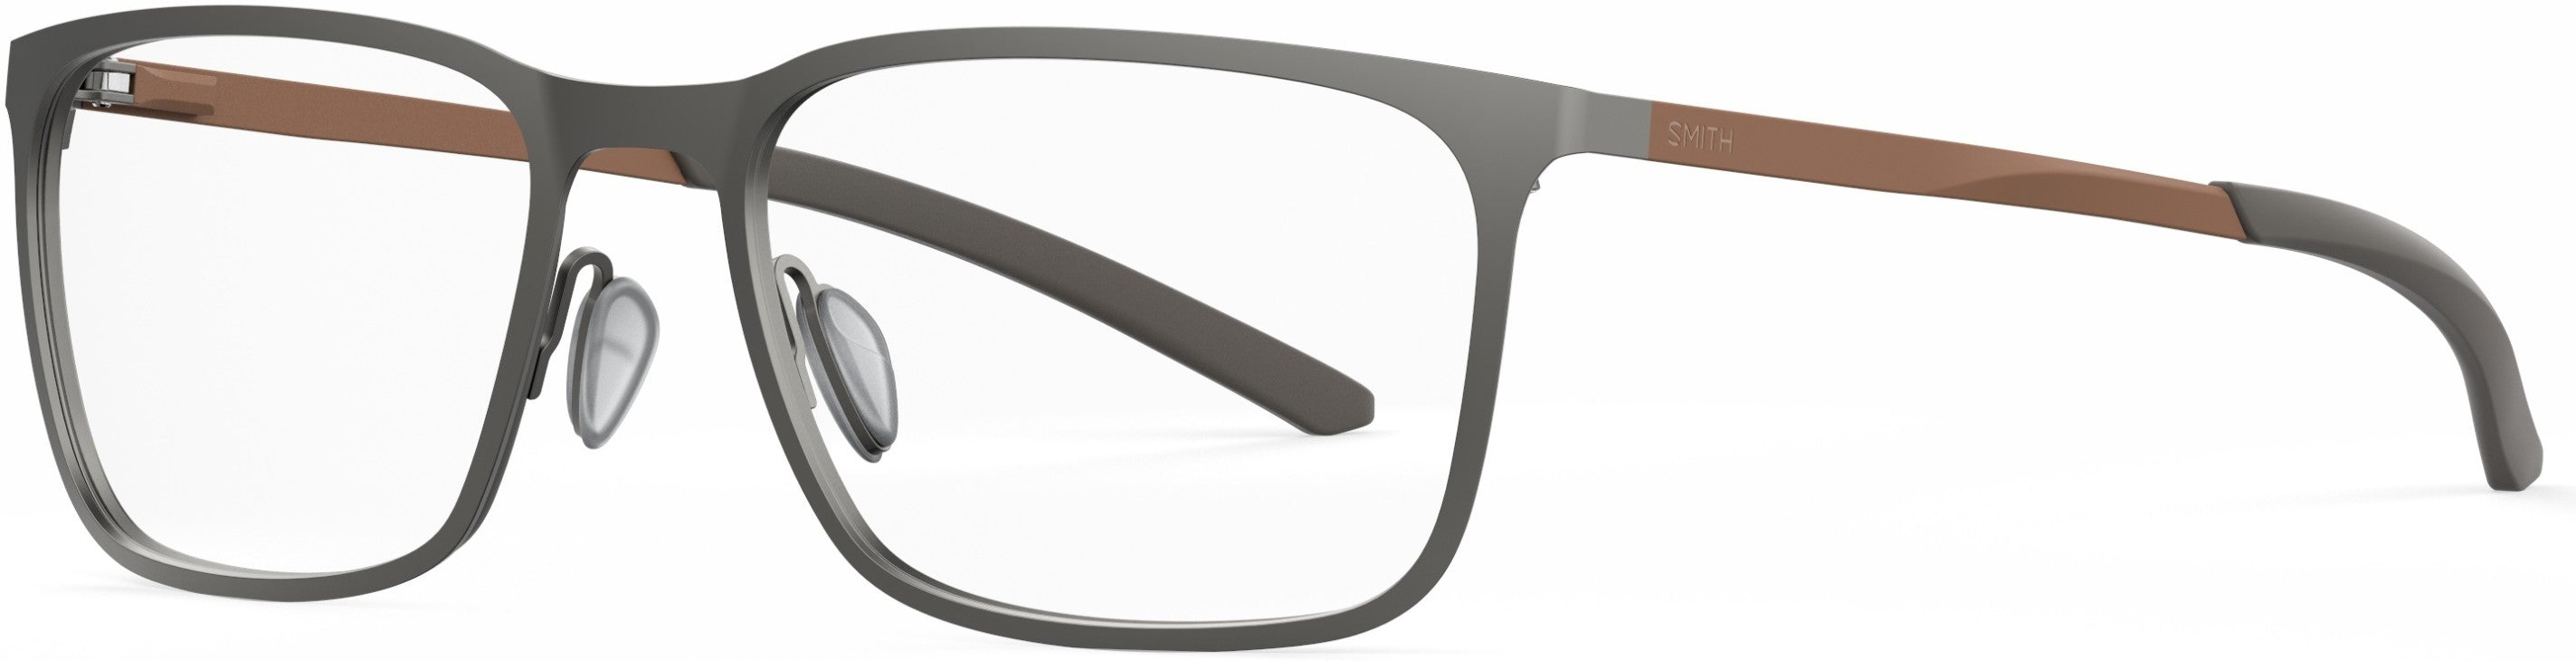 Smith Outsider Metal Rectangular Eyeglasses 009Q-009Q  Brown (00 Demo Lens)